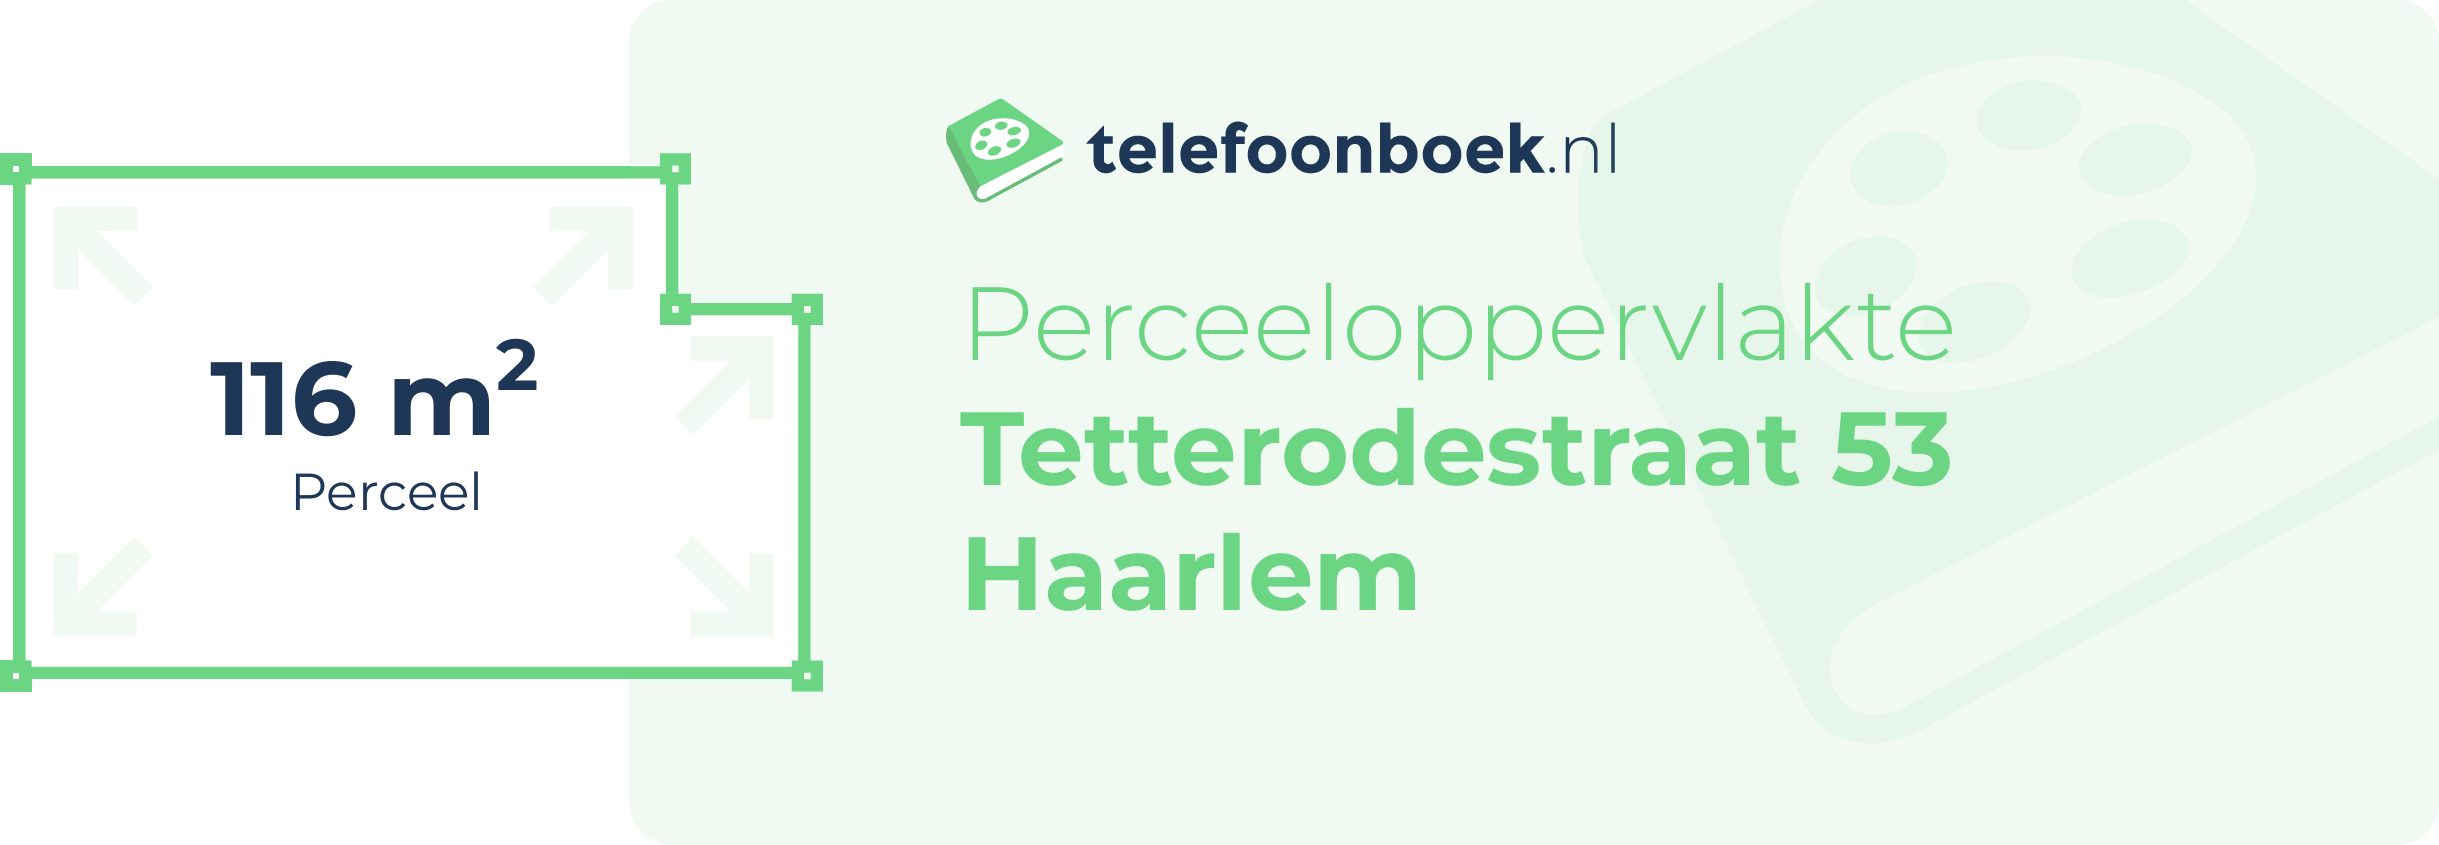 Perceeloppervlakte Tetterodestraat 53 Haarlem